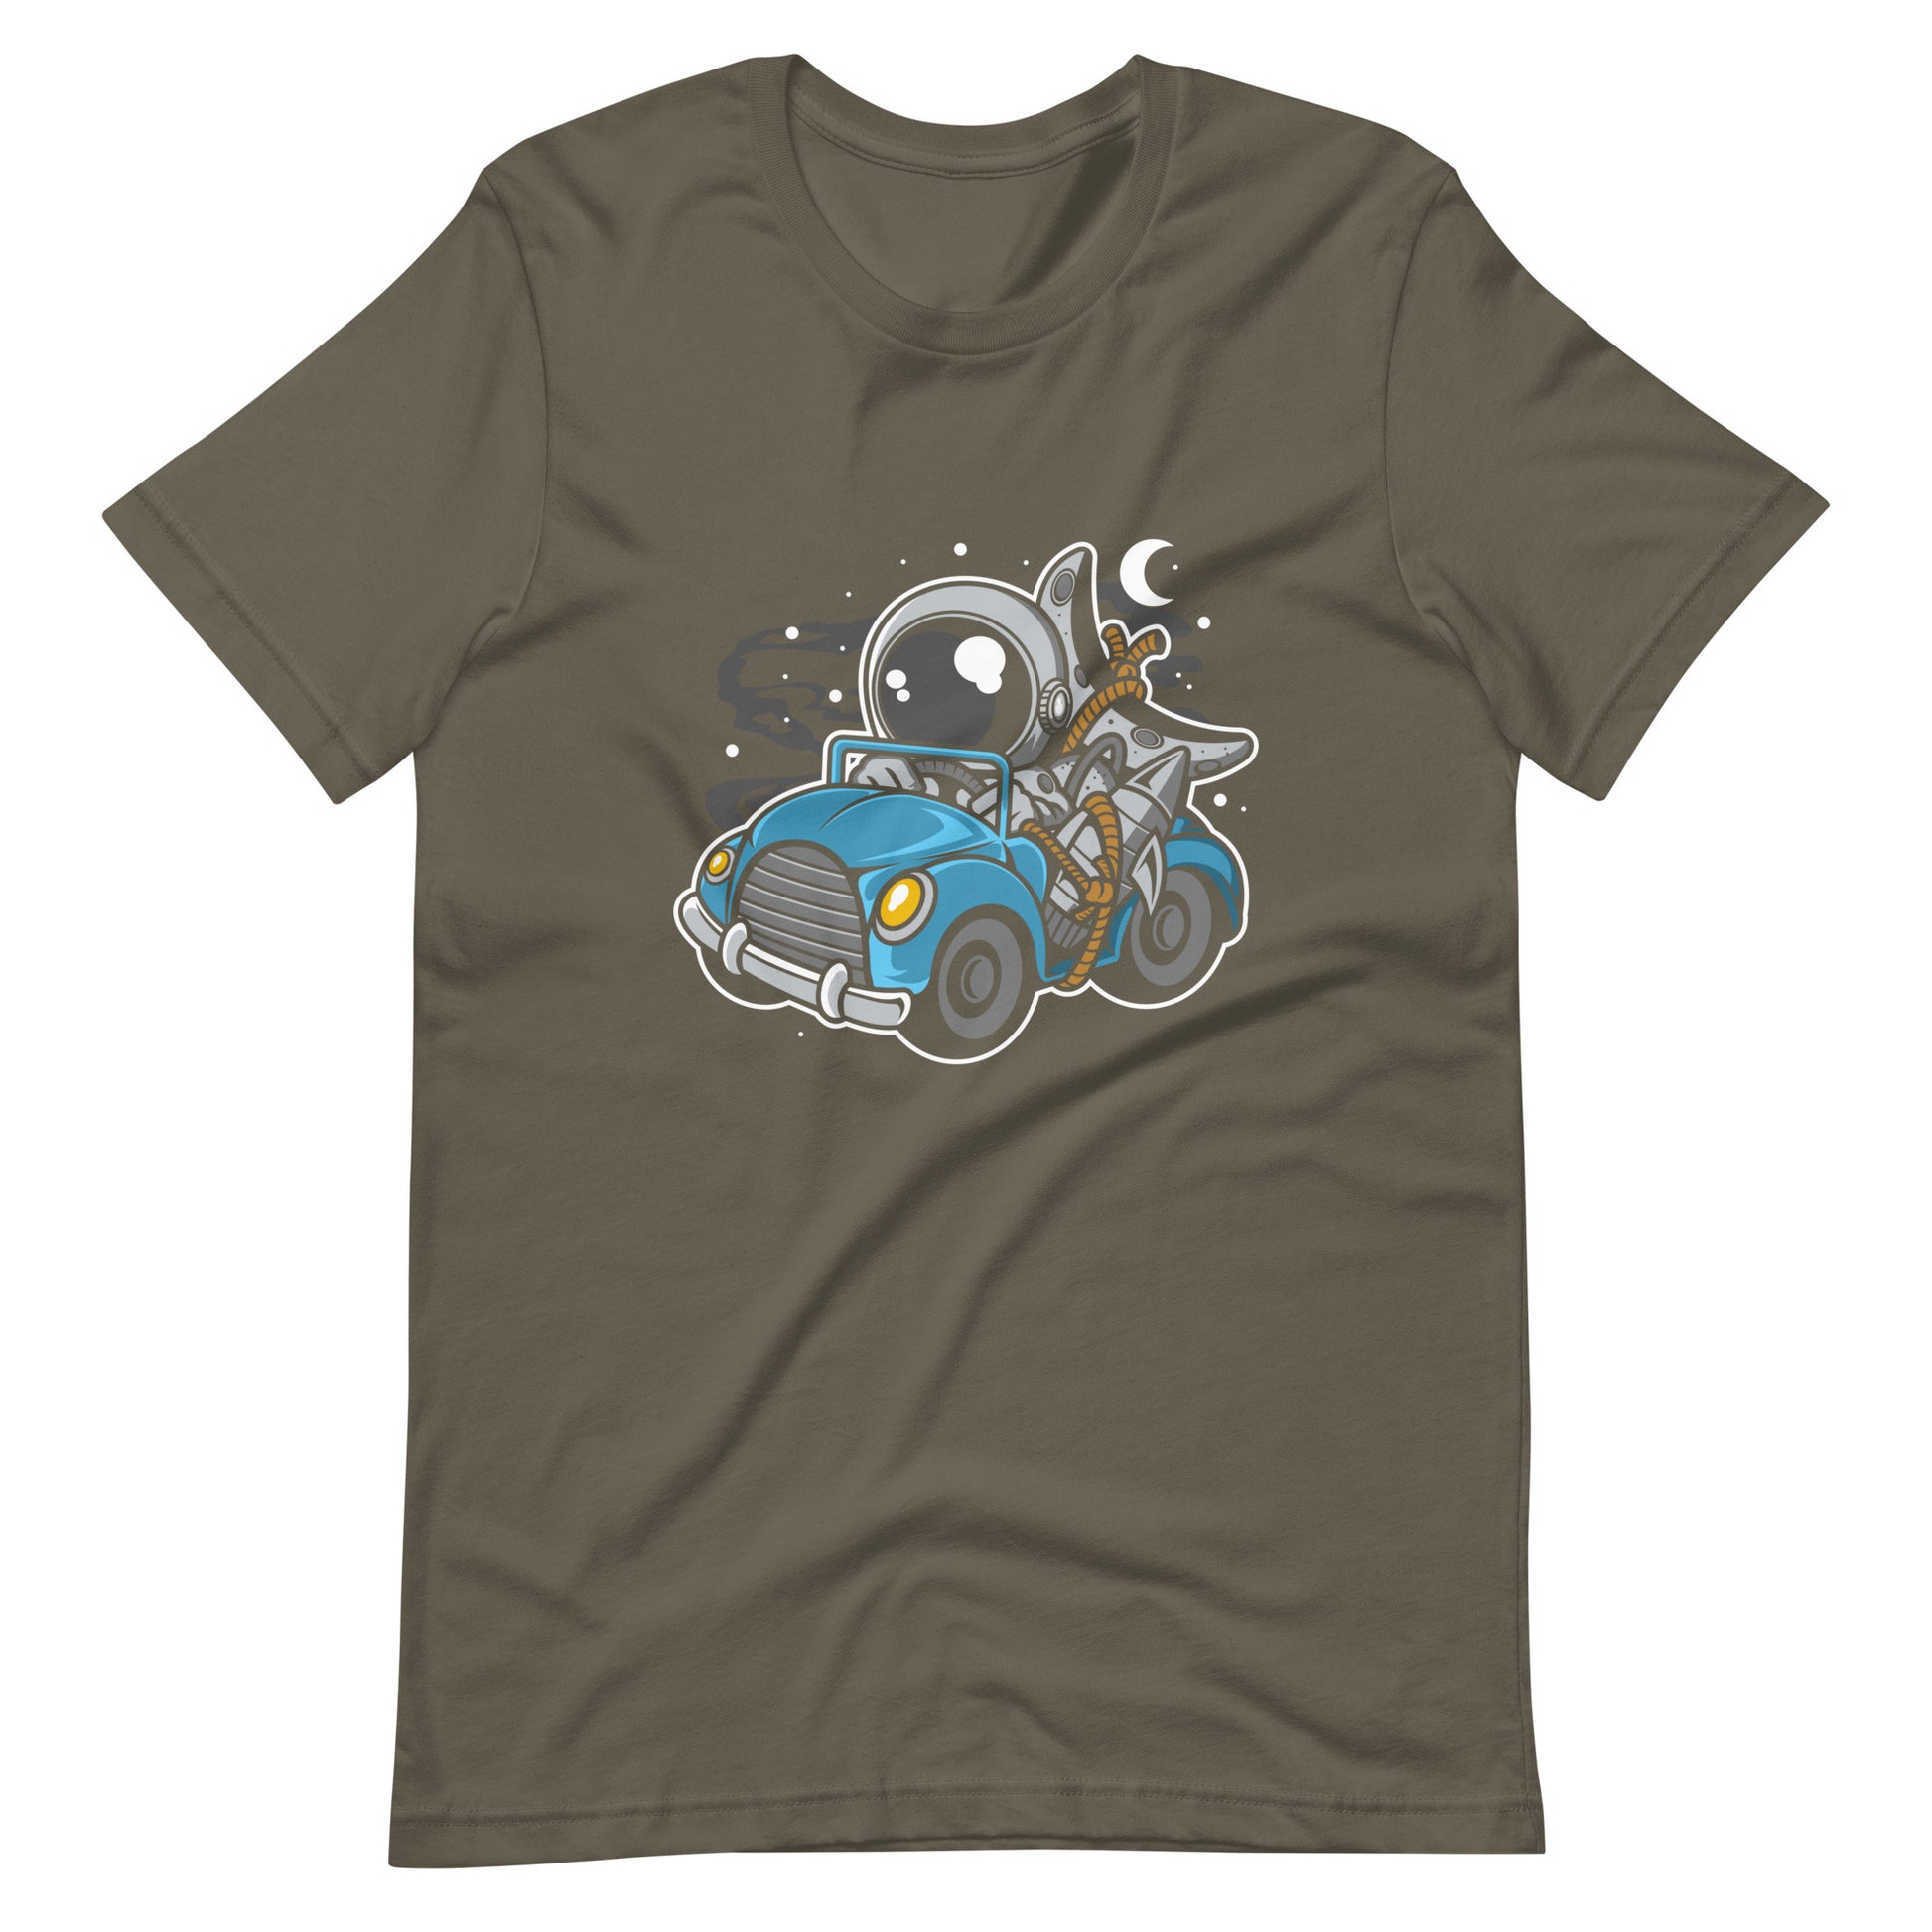 Astronaut Journey - Men's t-shirt - Army Front